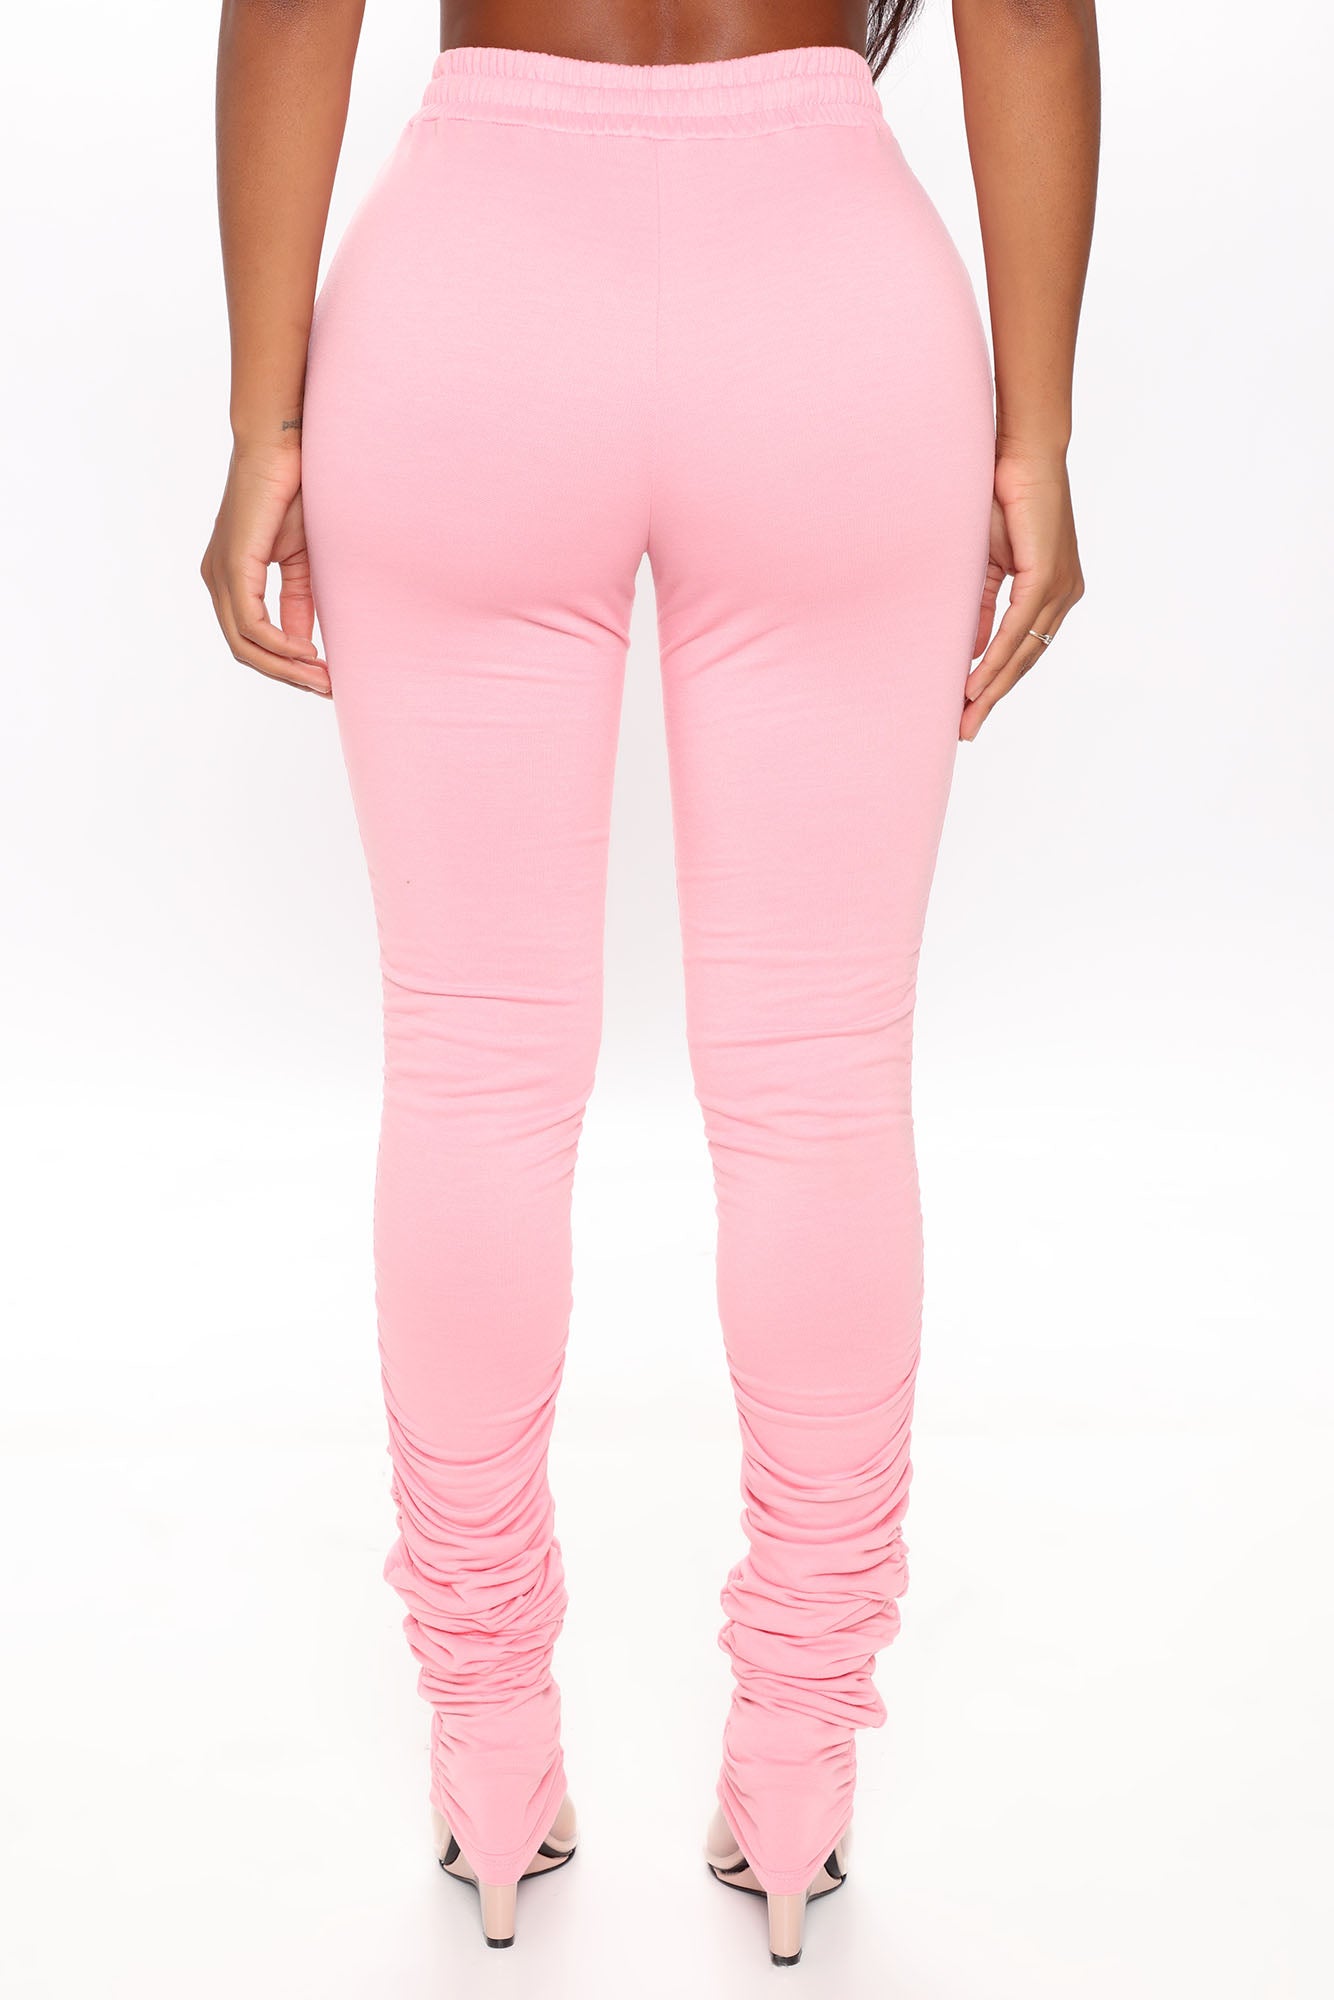 Chase The Bag Stacked Pant - Hot Pink – Fashion Nova